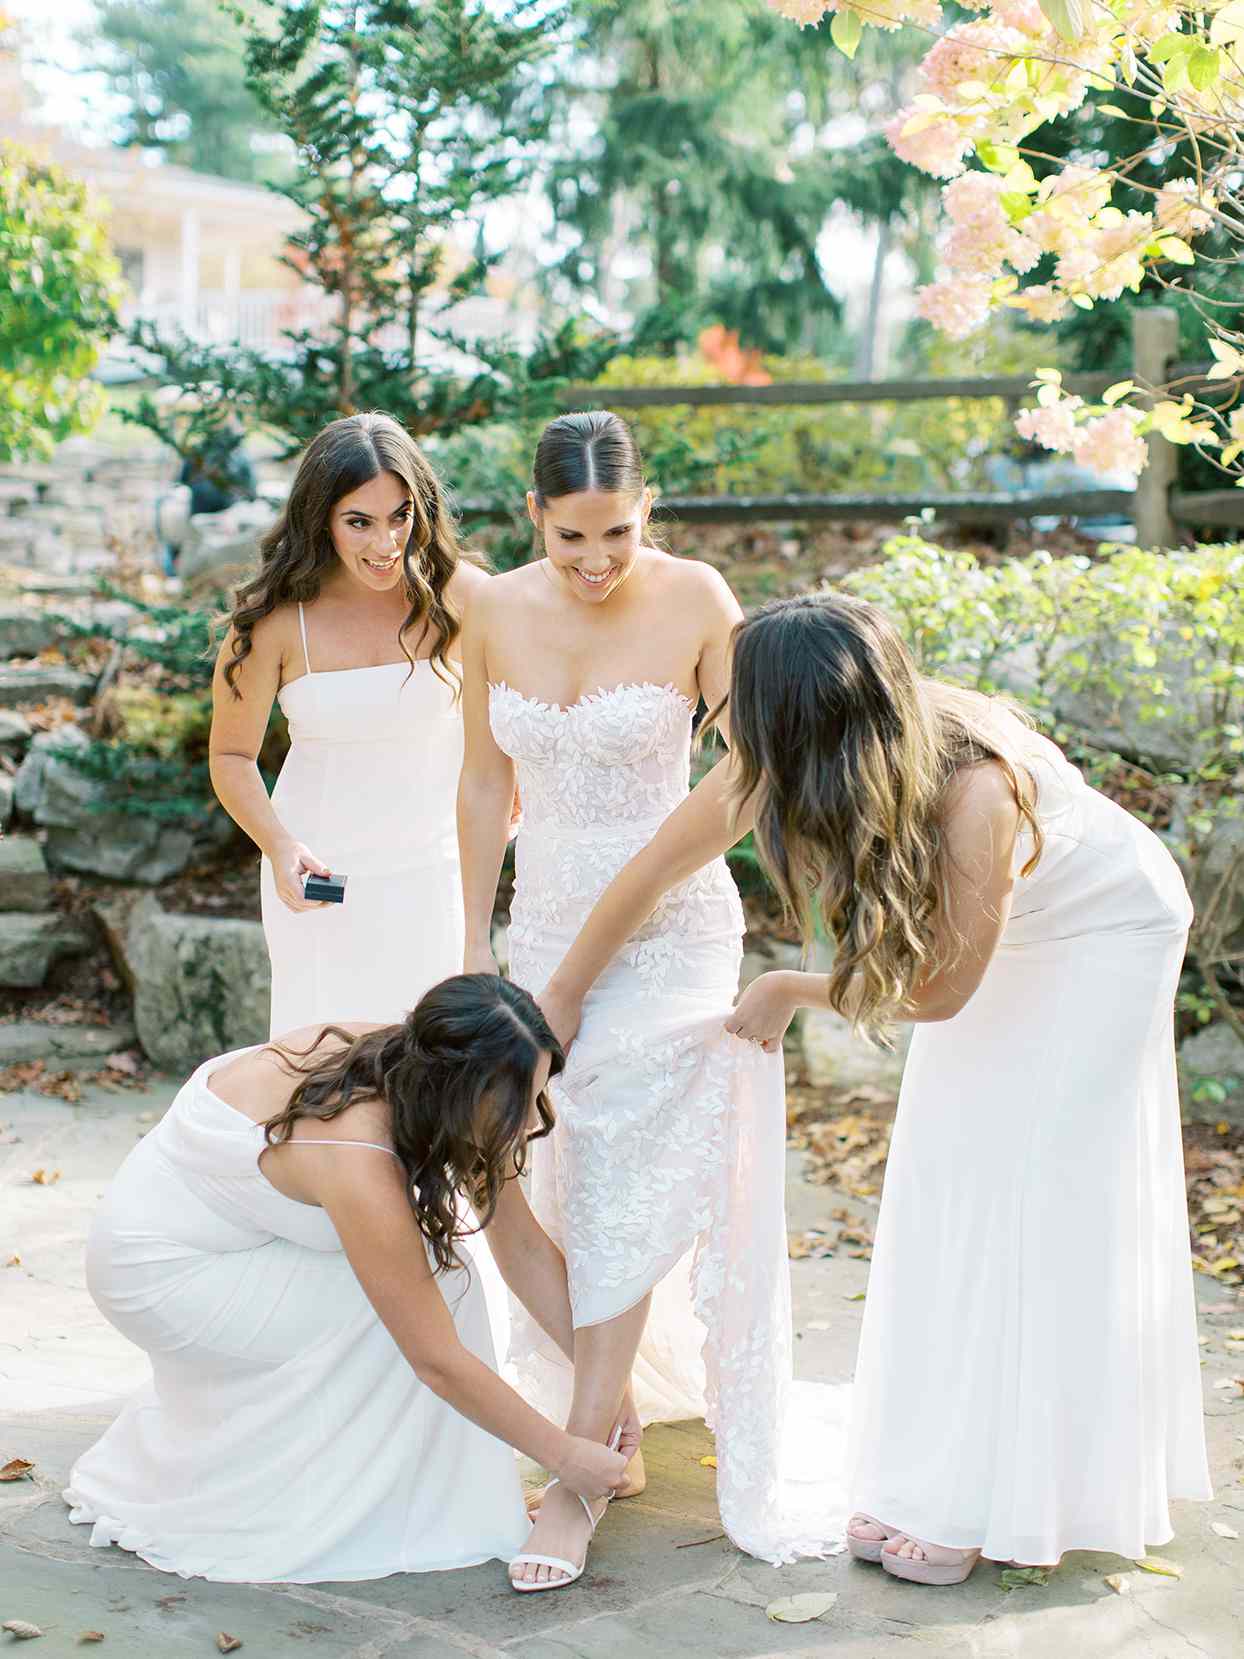 wedding bridesmaids helping bride strap on shoes